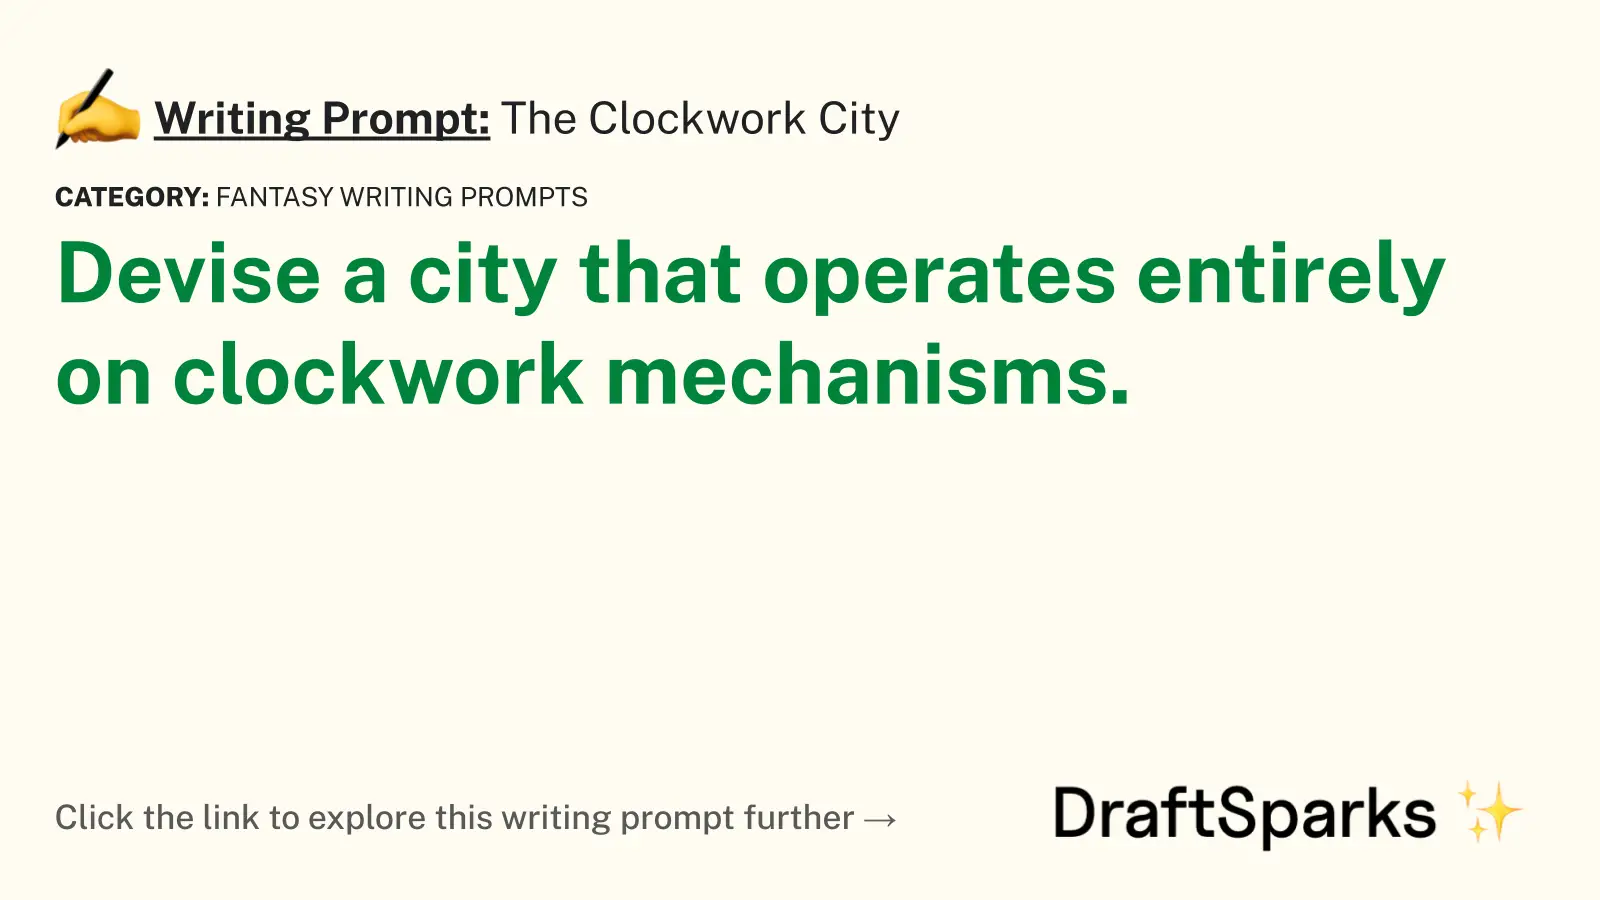 The Clockwork City